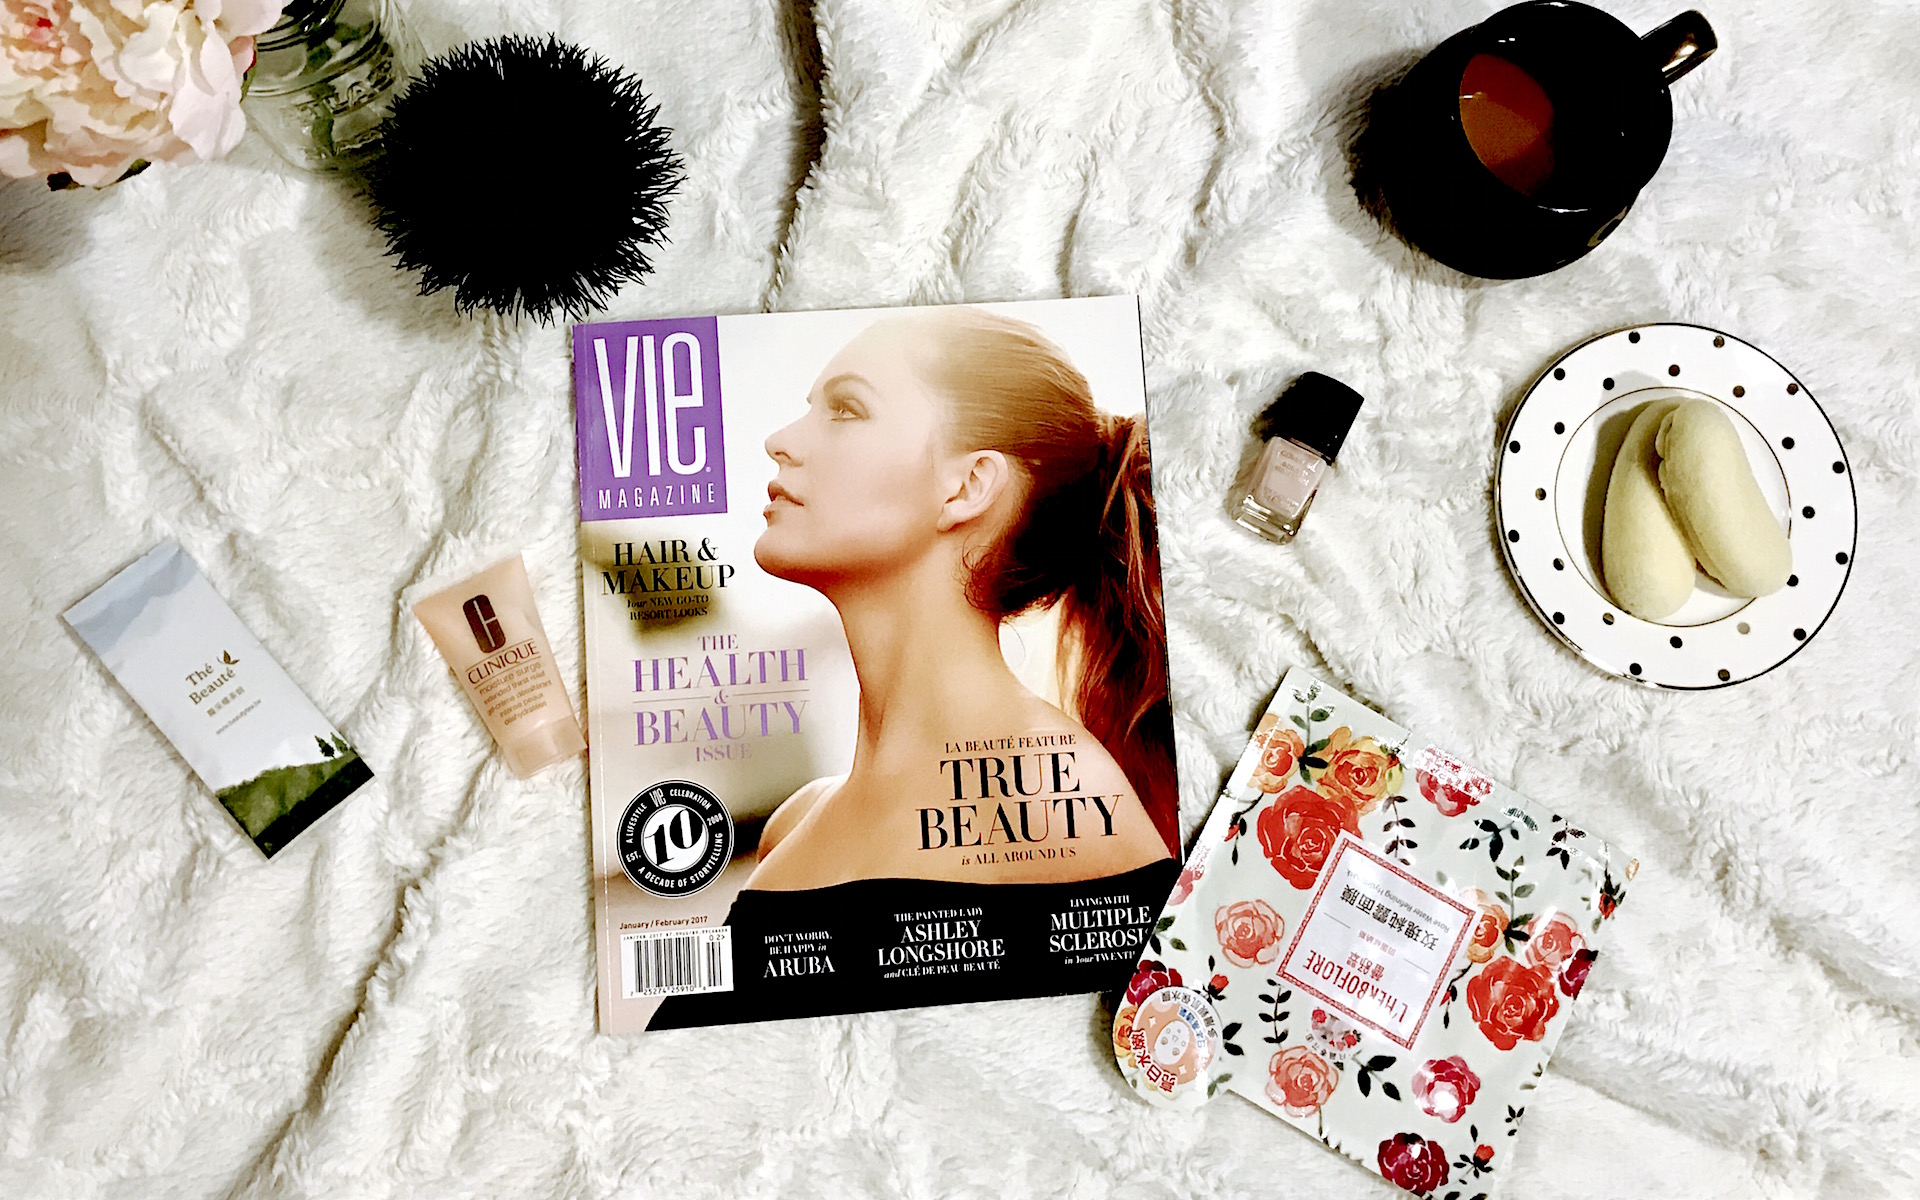 vie magazine flat lay health and beauty issue 2017